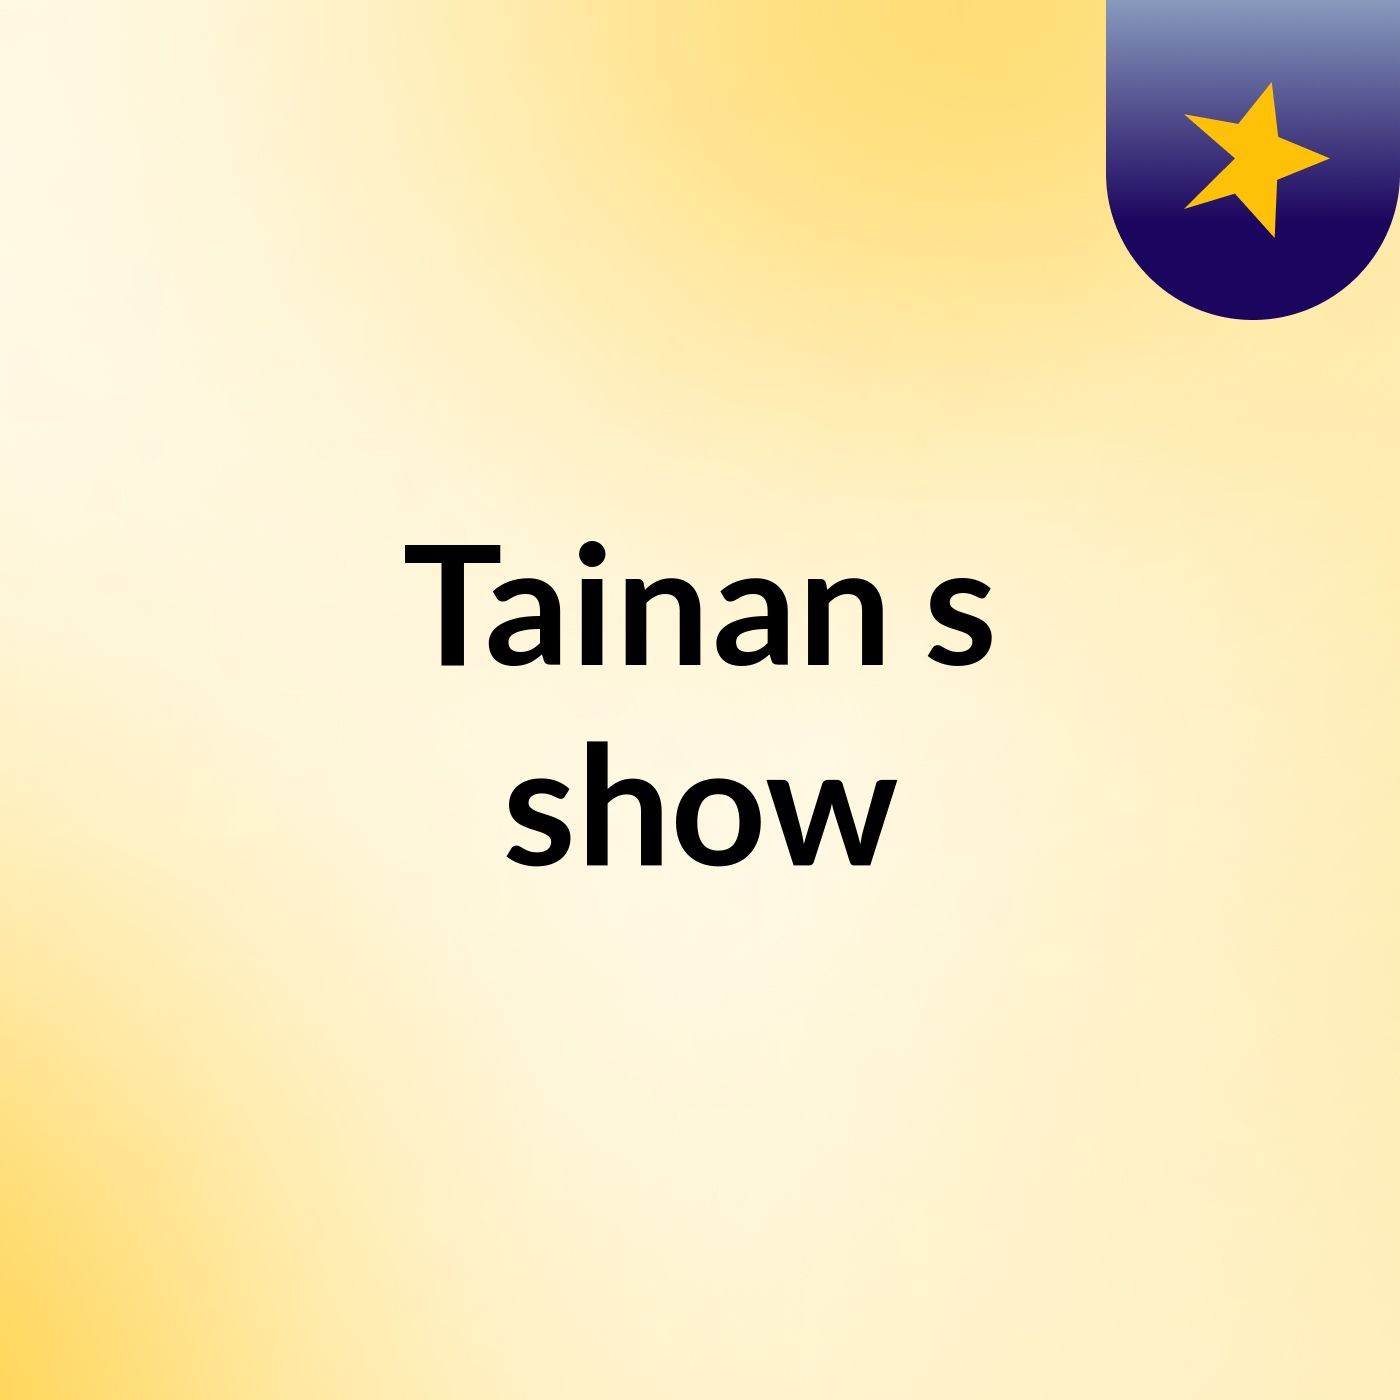 Tainan's show